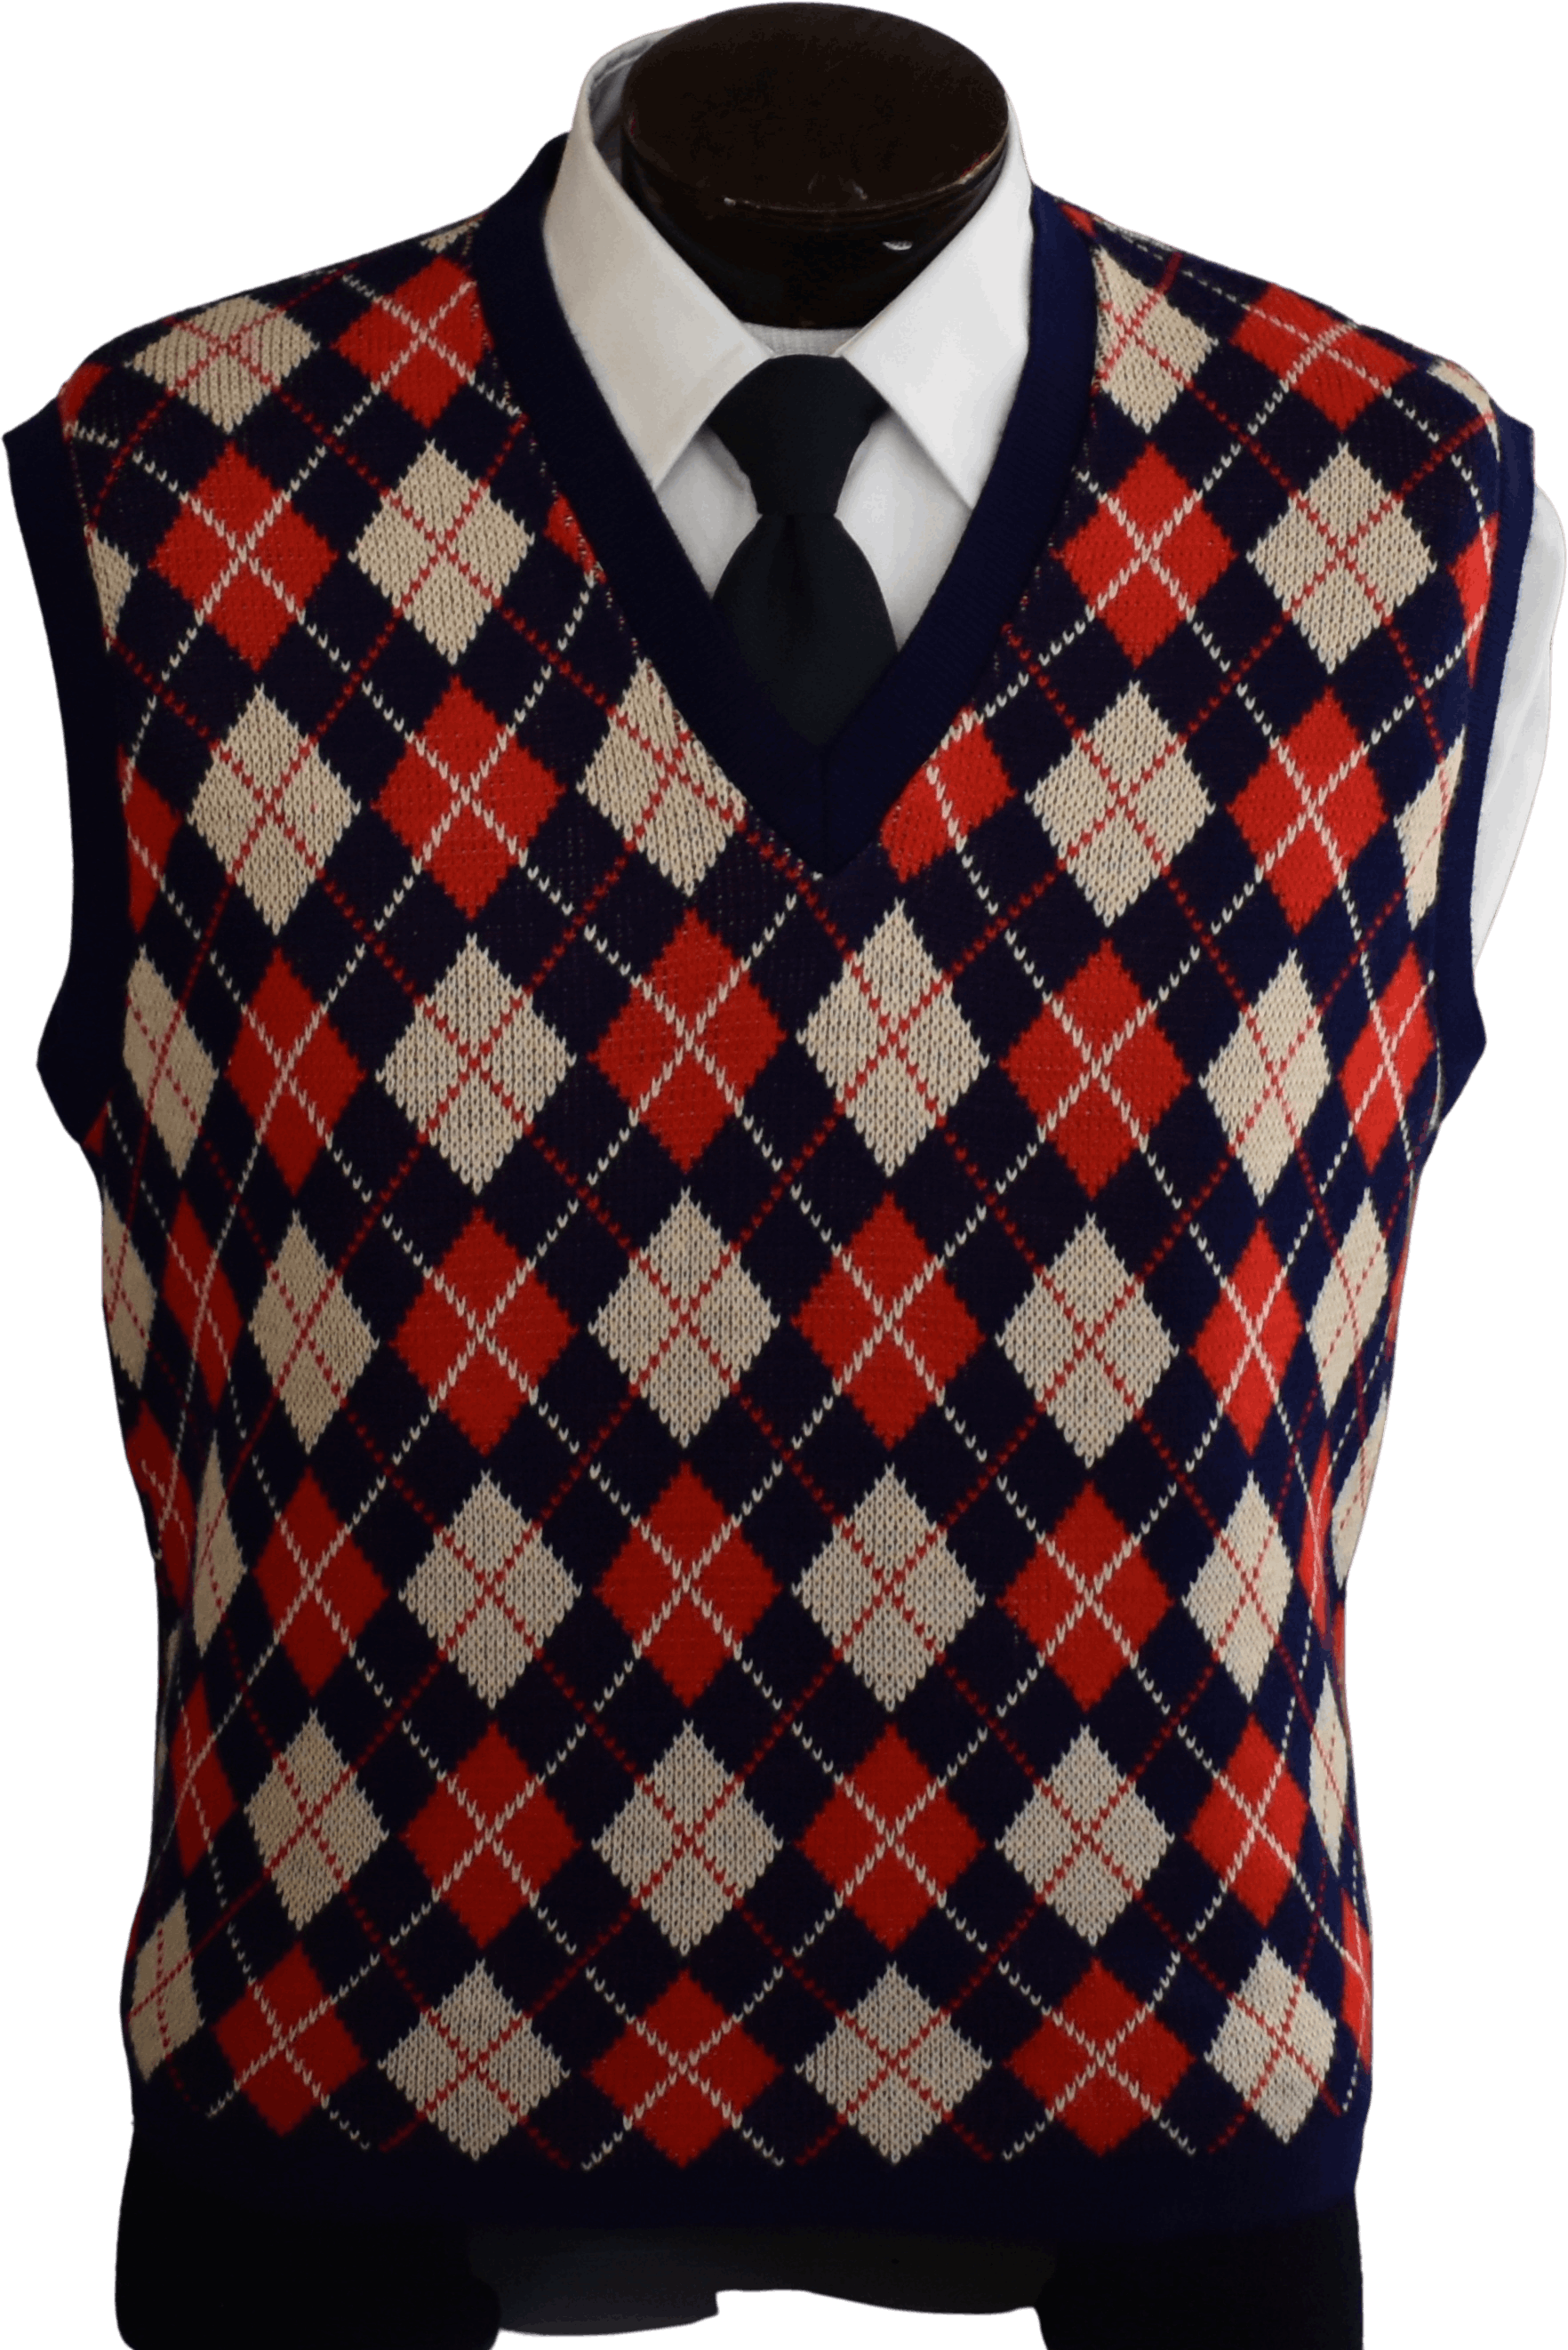 Vintage 70's Argyle Sweater Vest by King's Road | Shop THRILLING